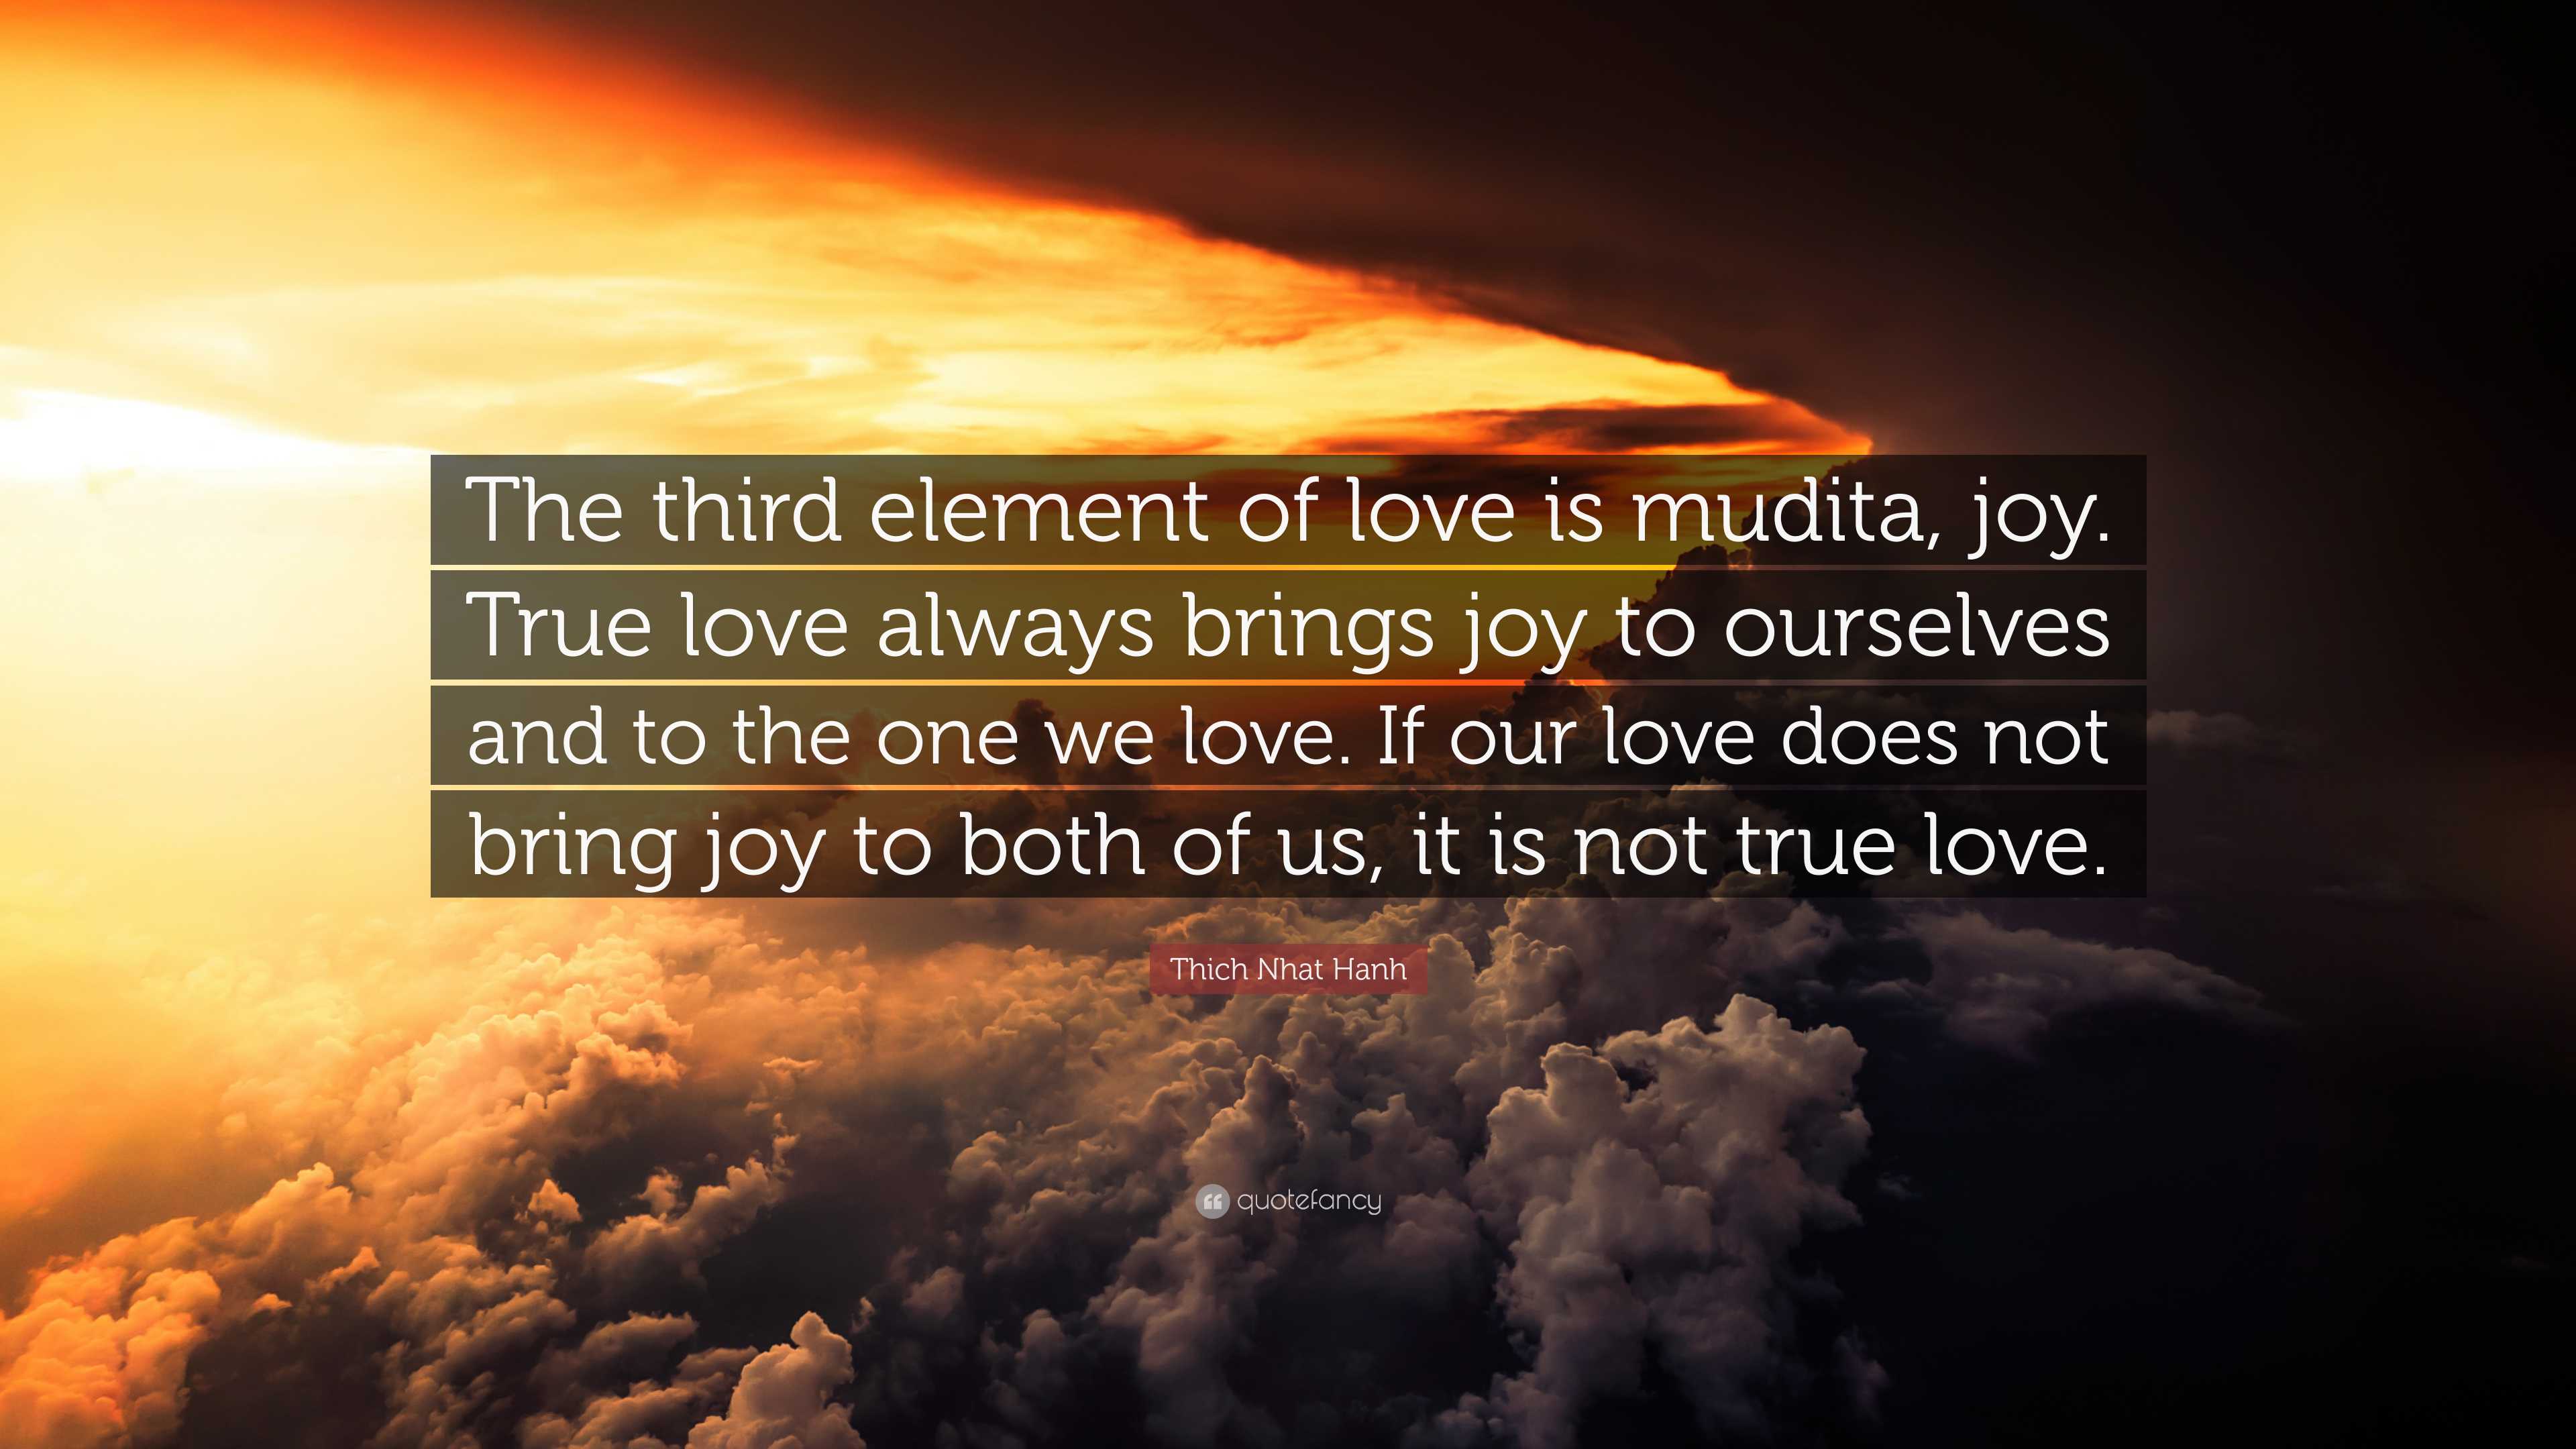 Thich Nhat Hanh Quote: “The third element of love is mudita, joy